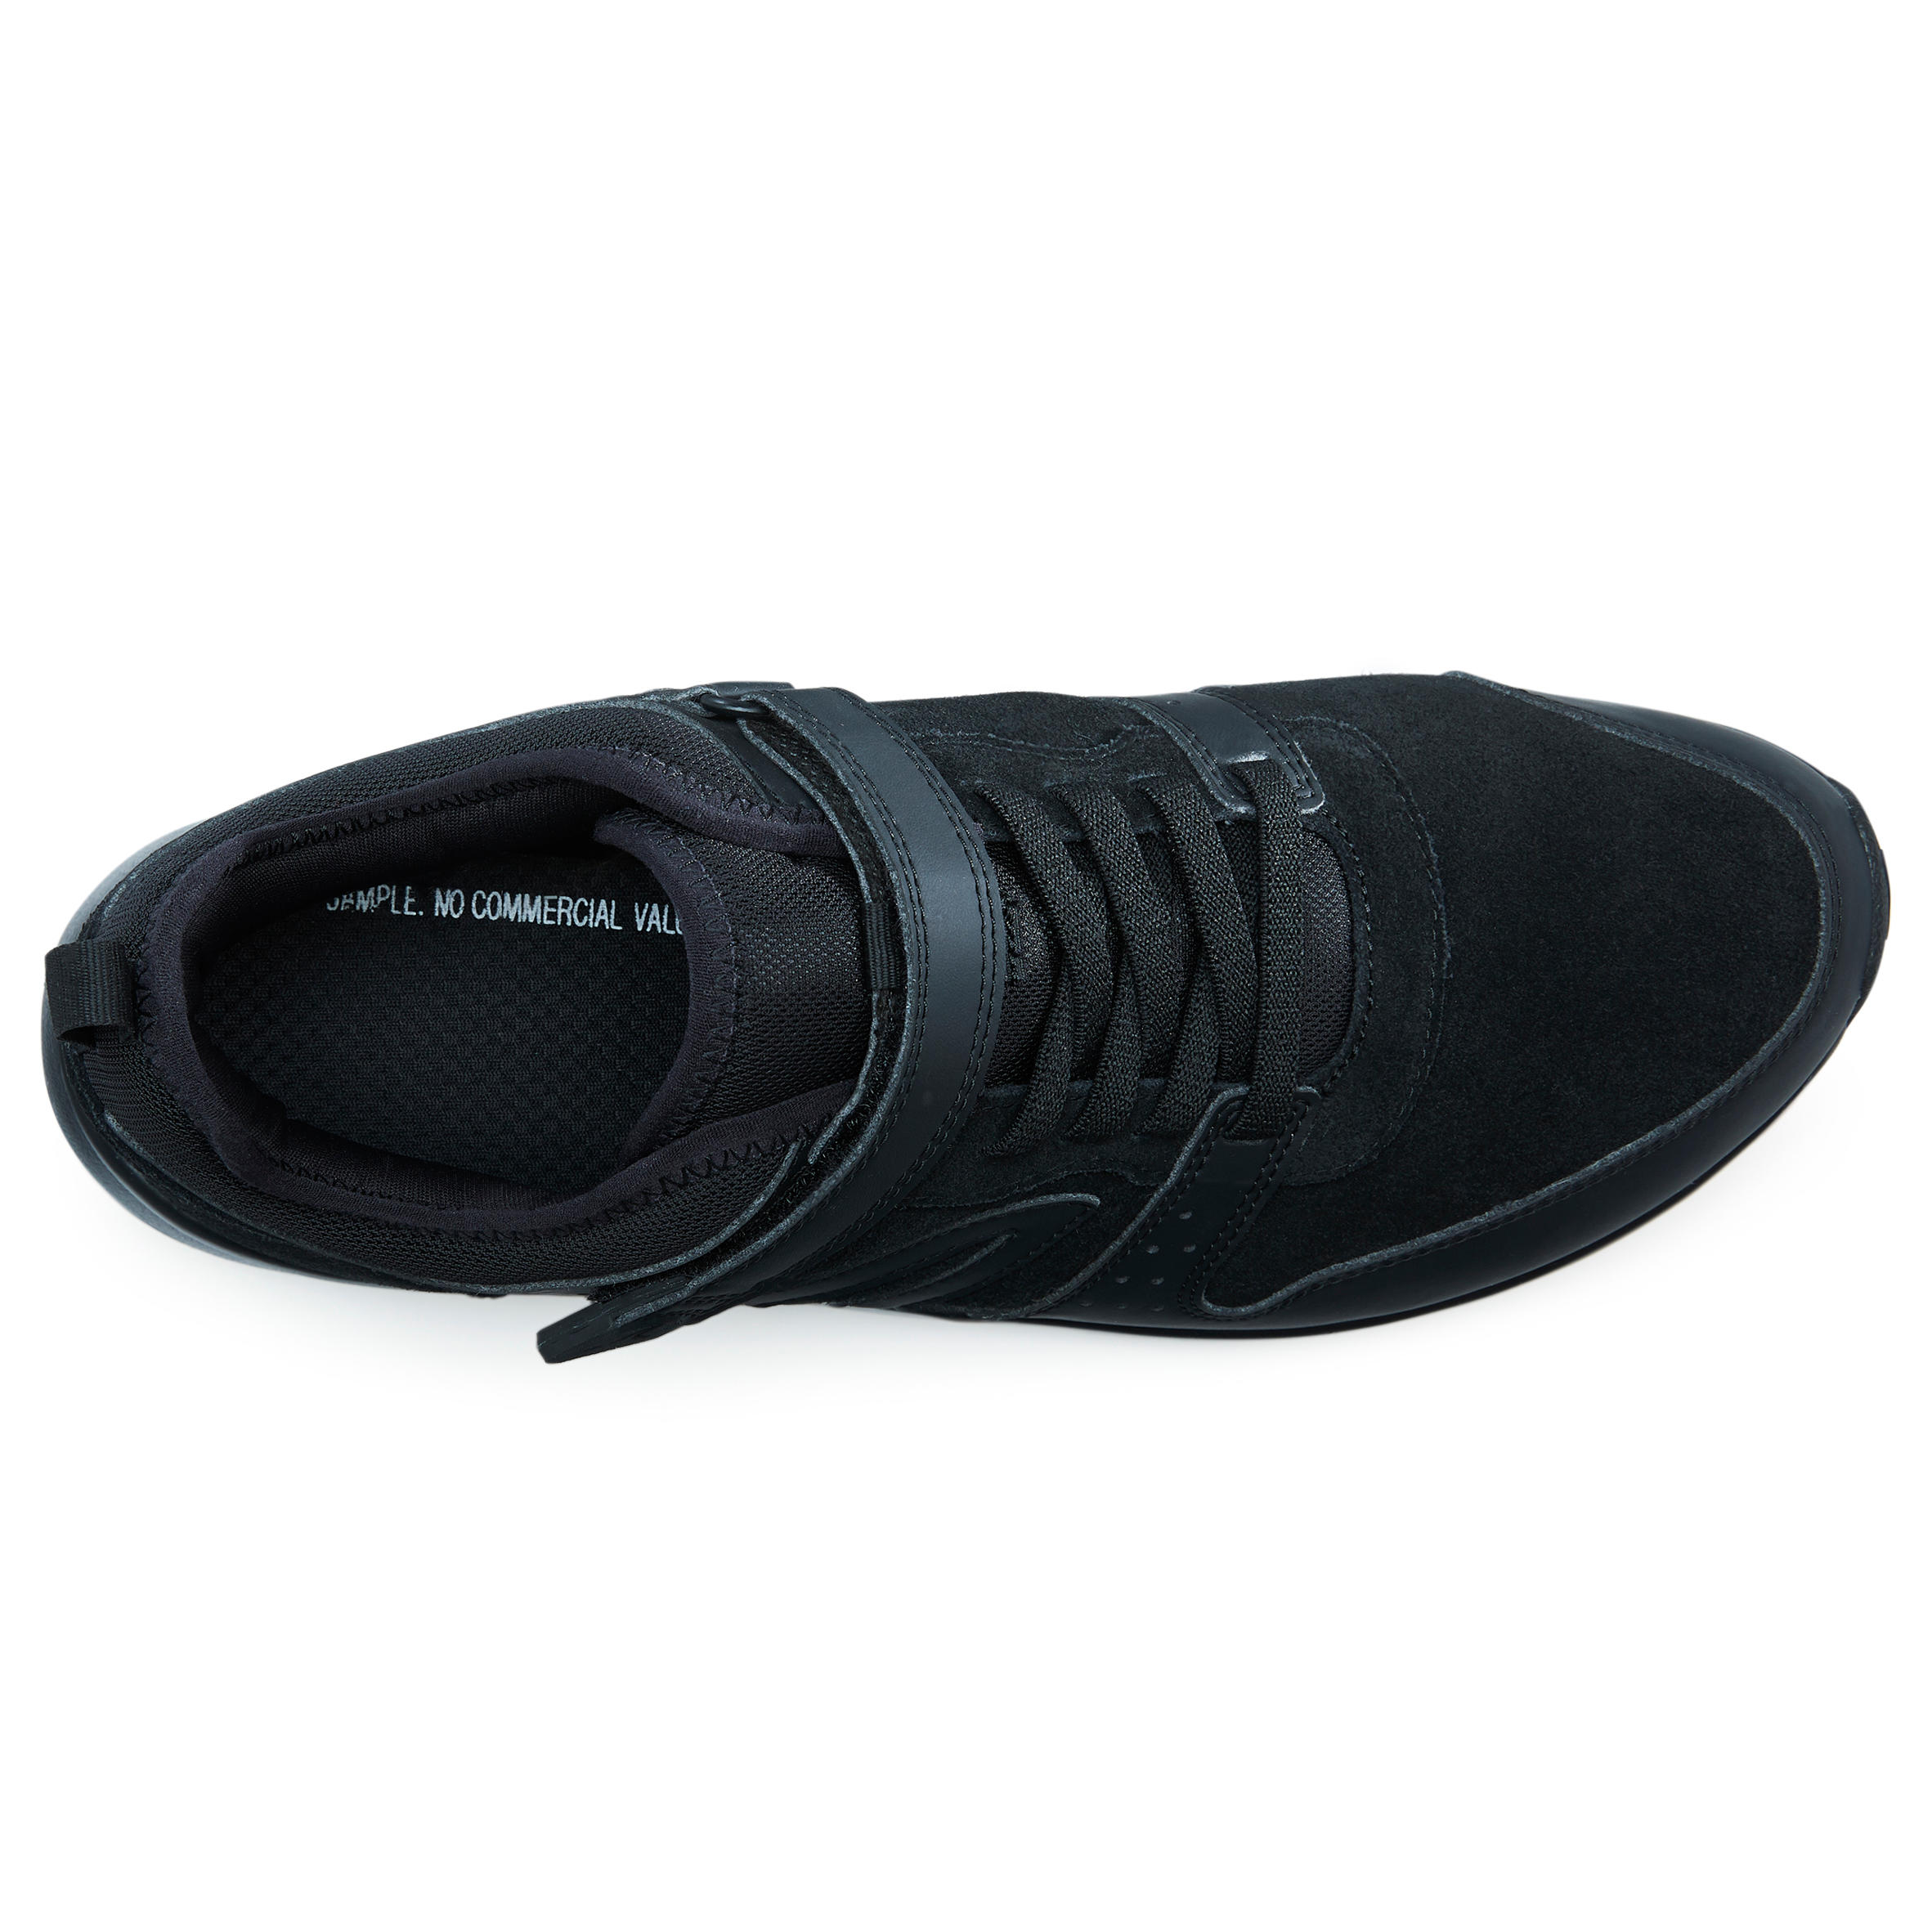 Actiwalk Easy Leather Men's Urban Walking Shoes - Black 10/14